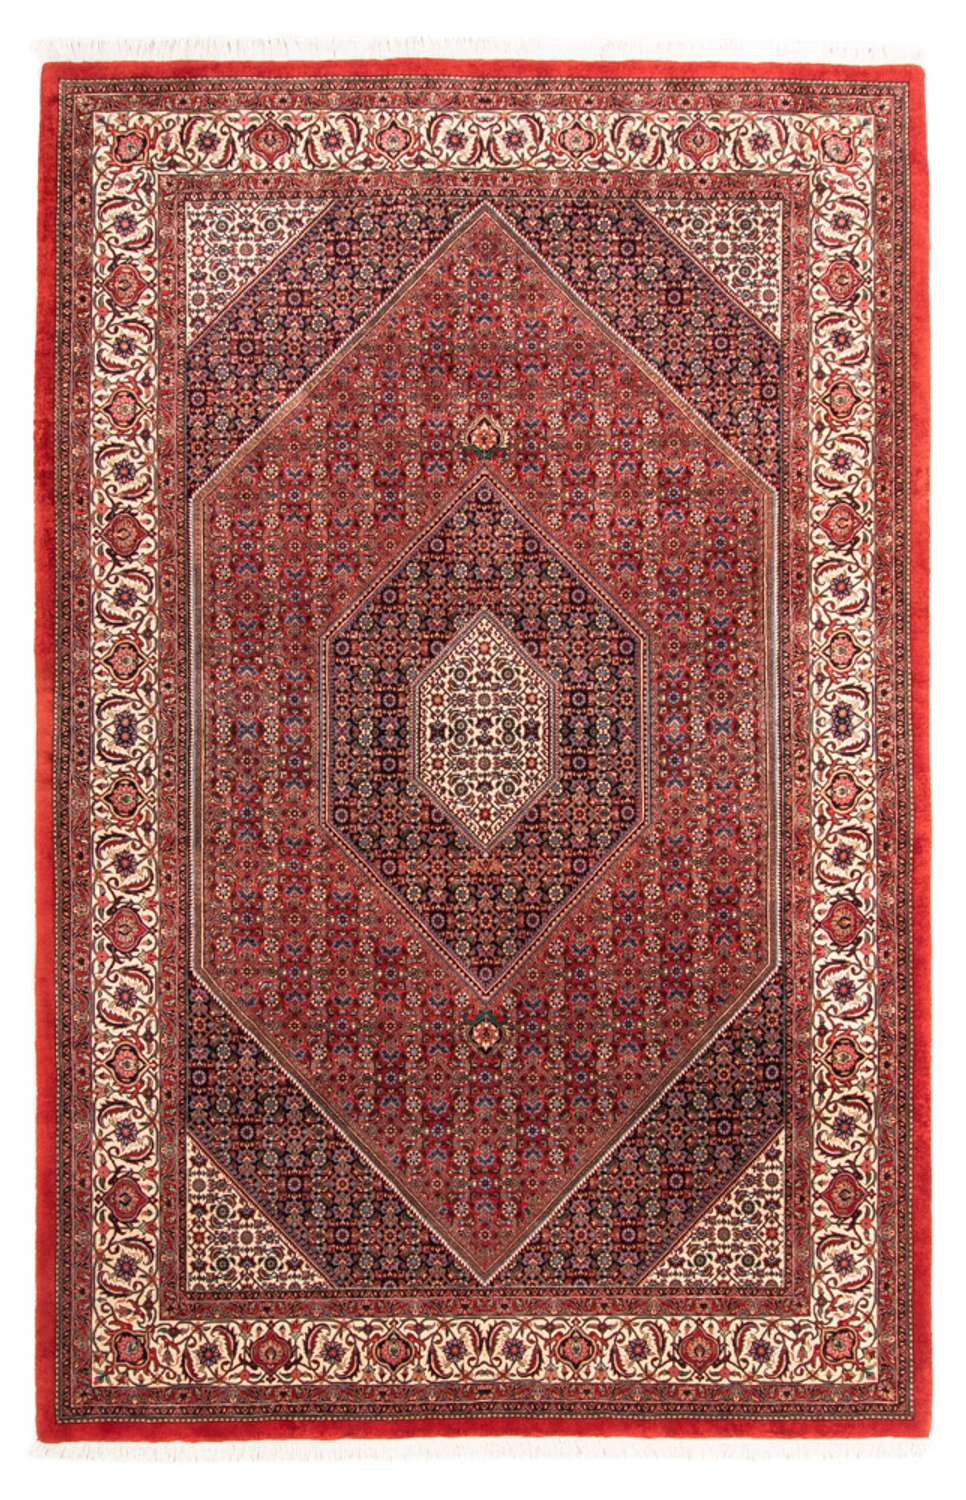 Persisk matta - Bijar - Royal - 310 x 205 cm - röd